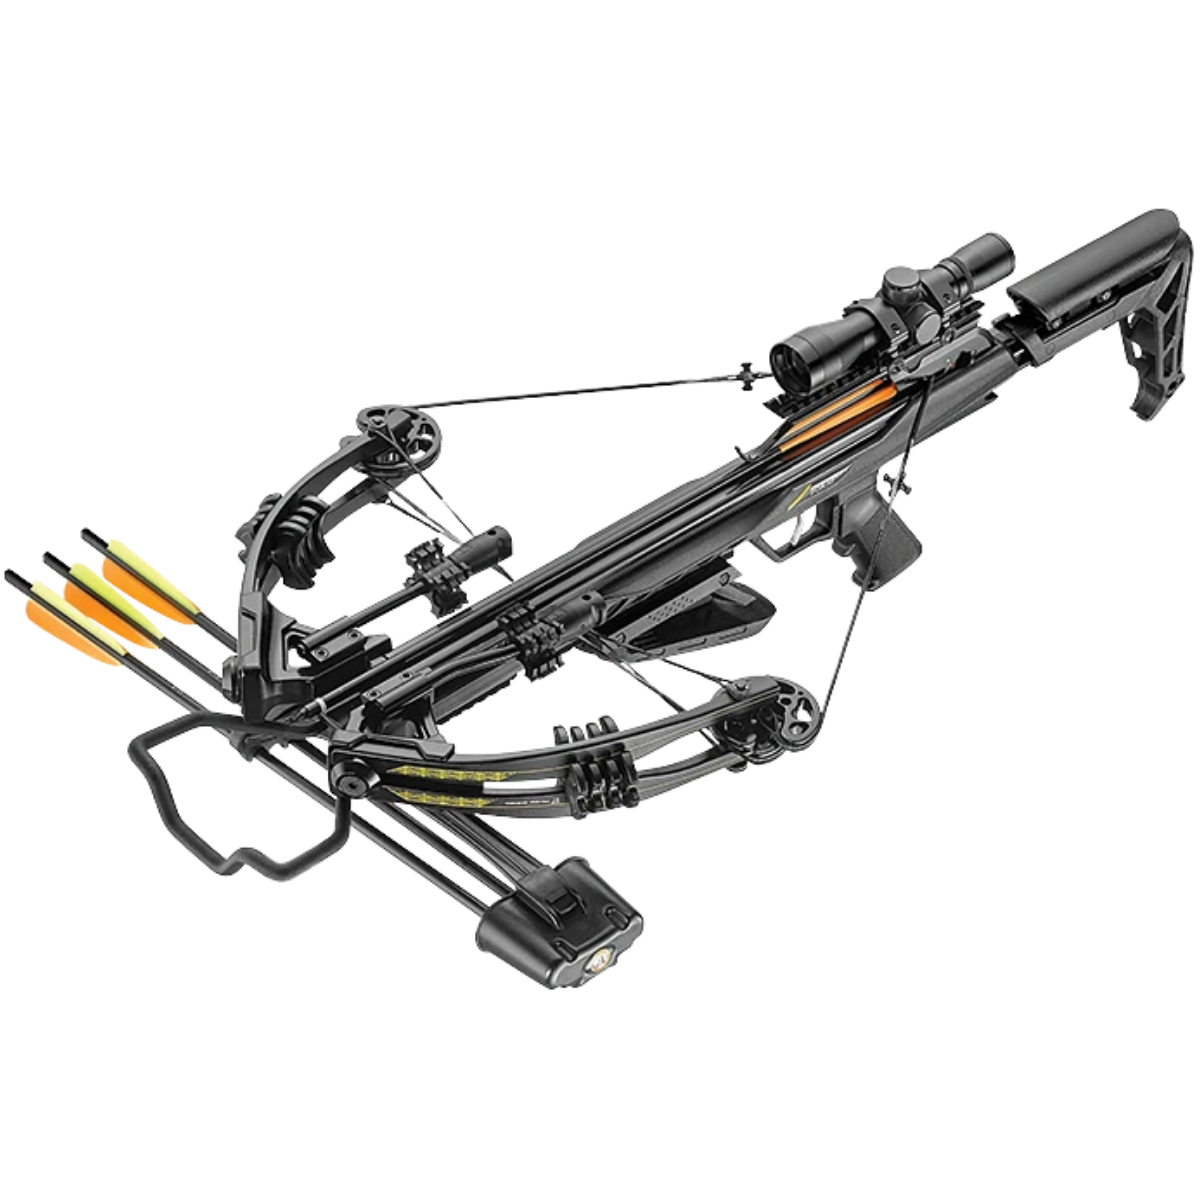 EK Archery Blade+ Compound Crossbow Package 340fps